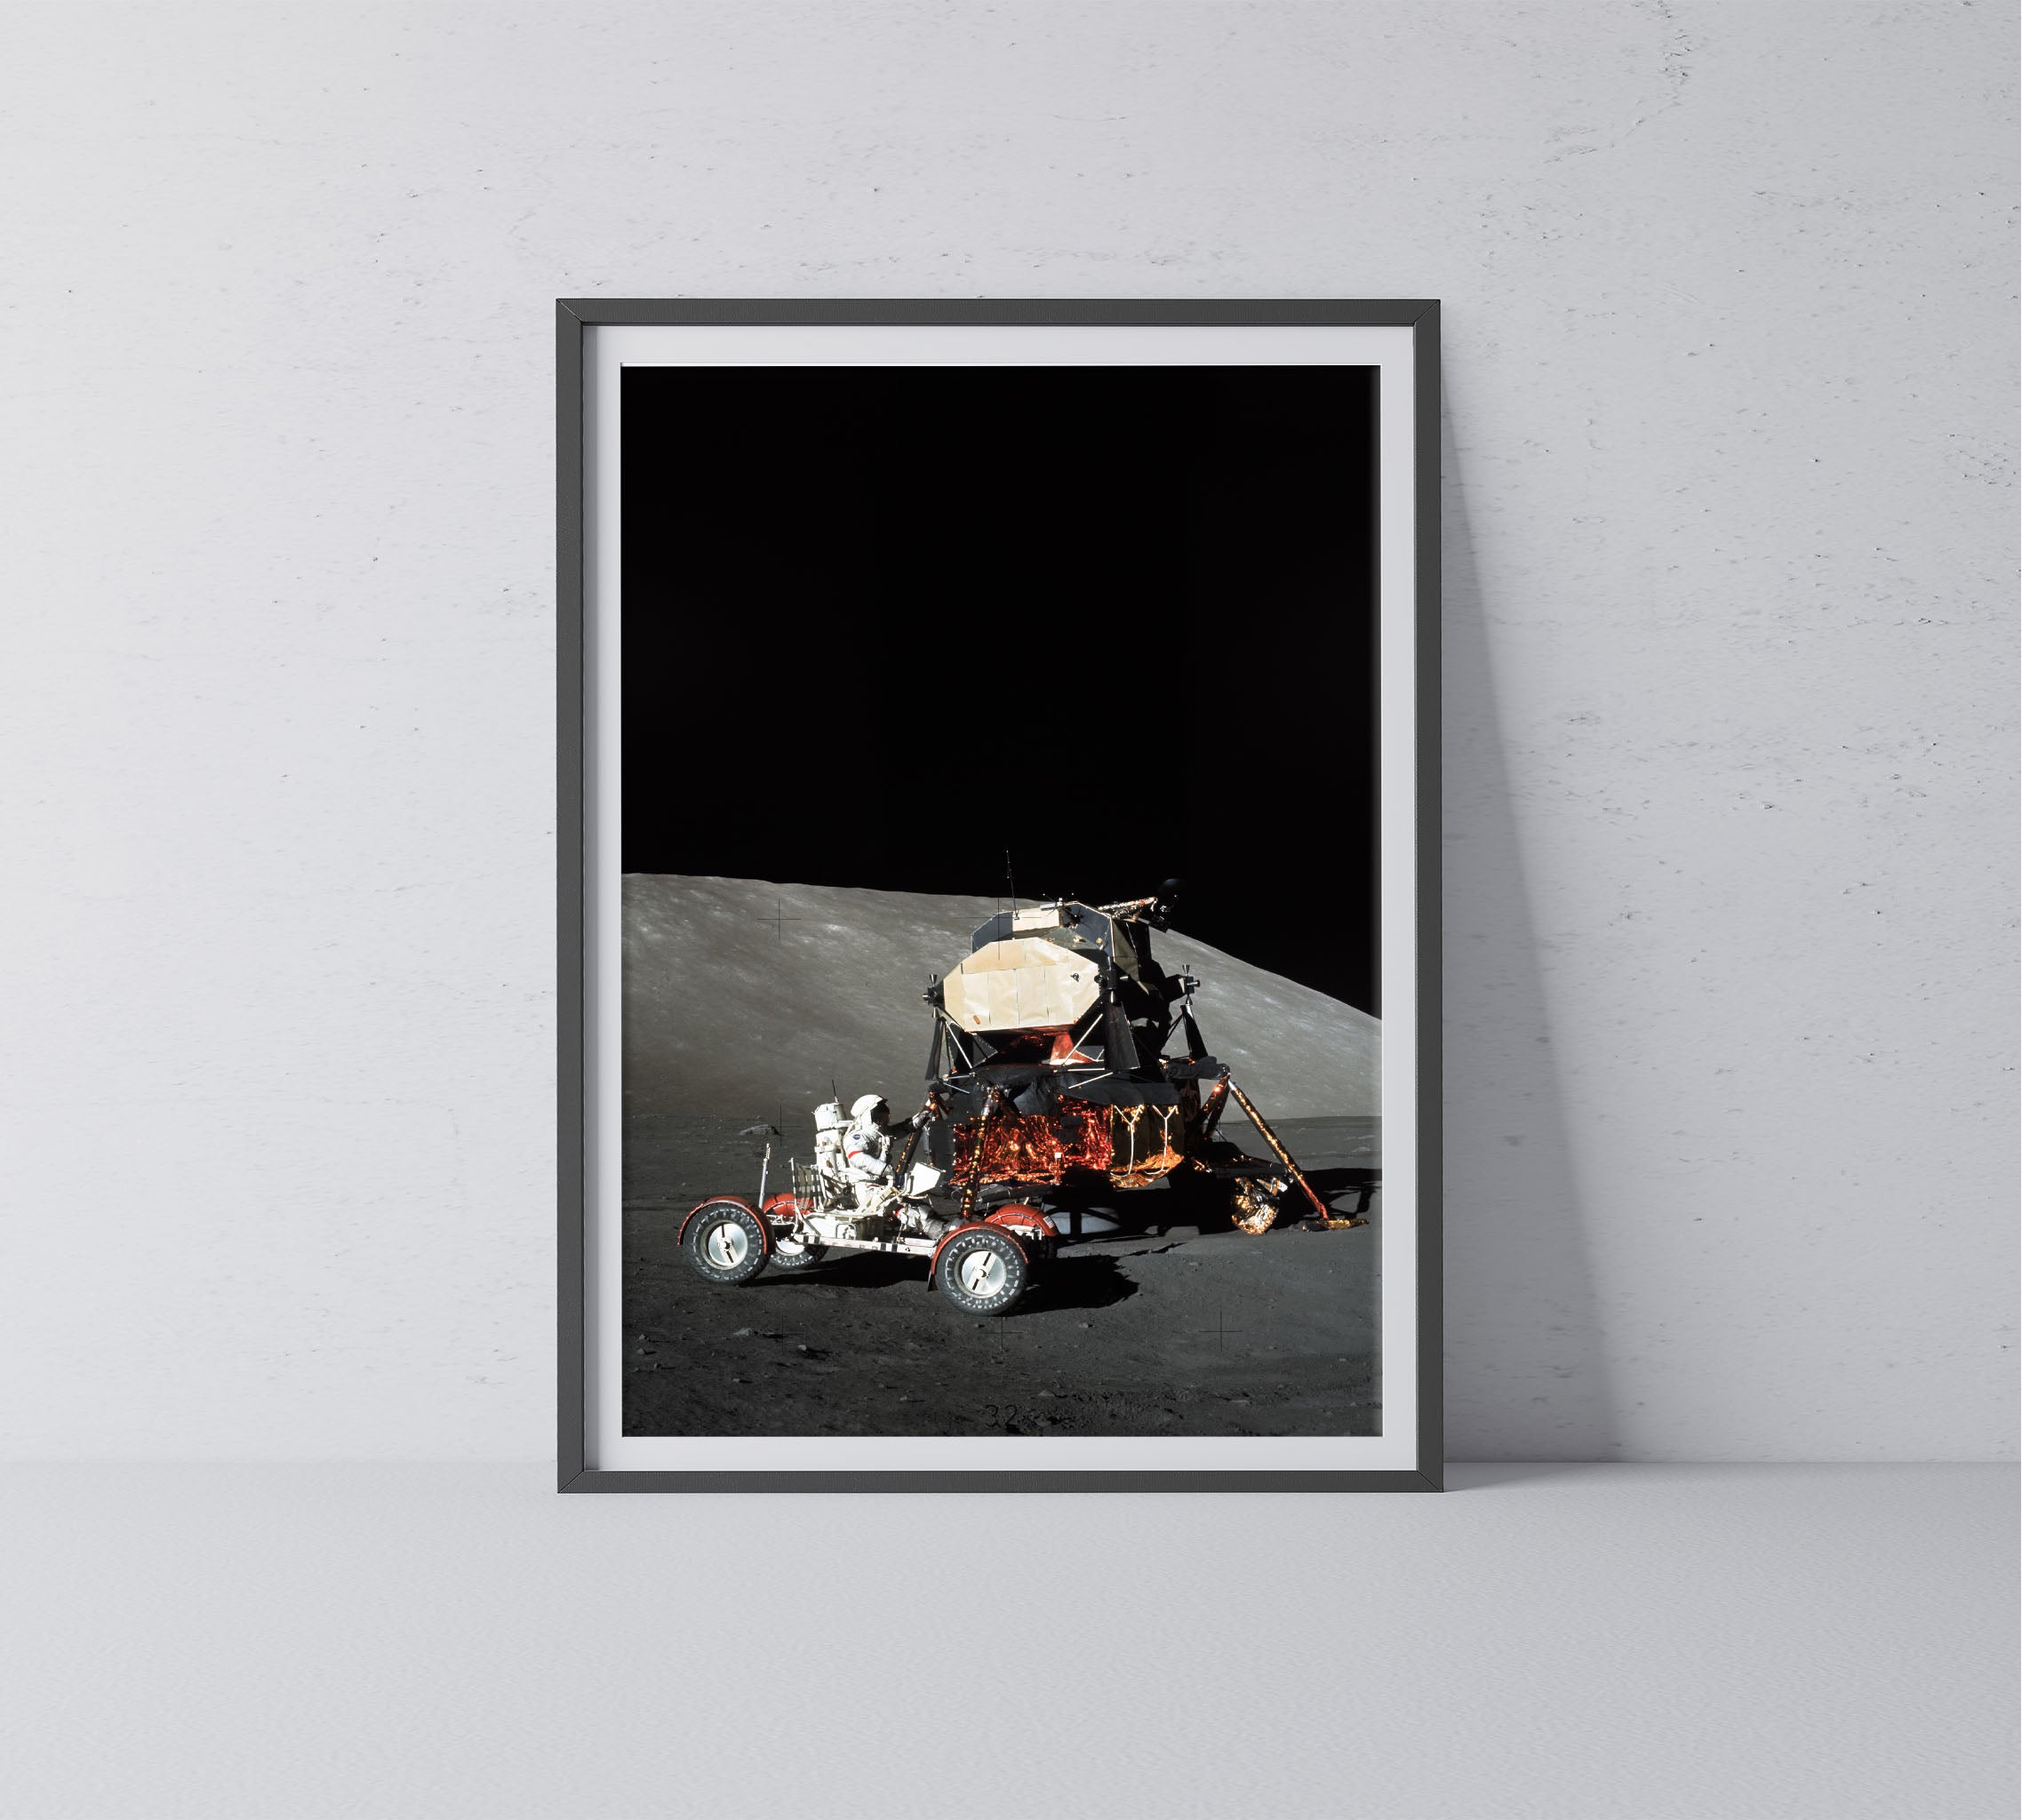 Landing site Apollo 17